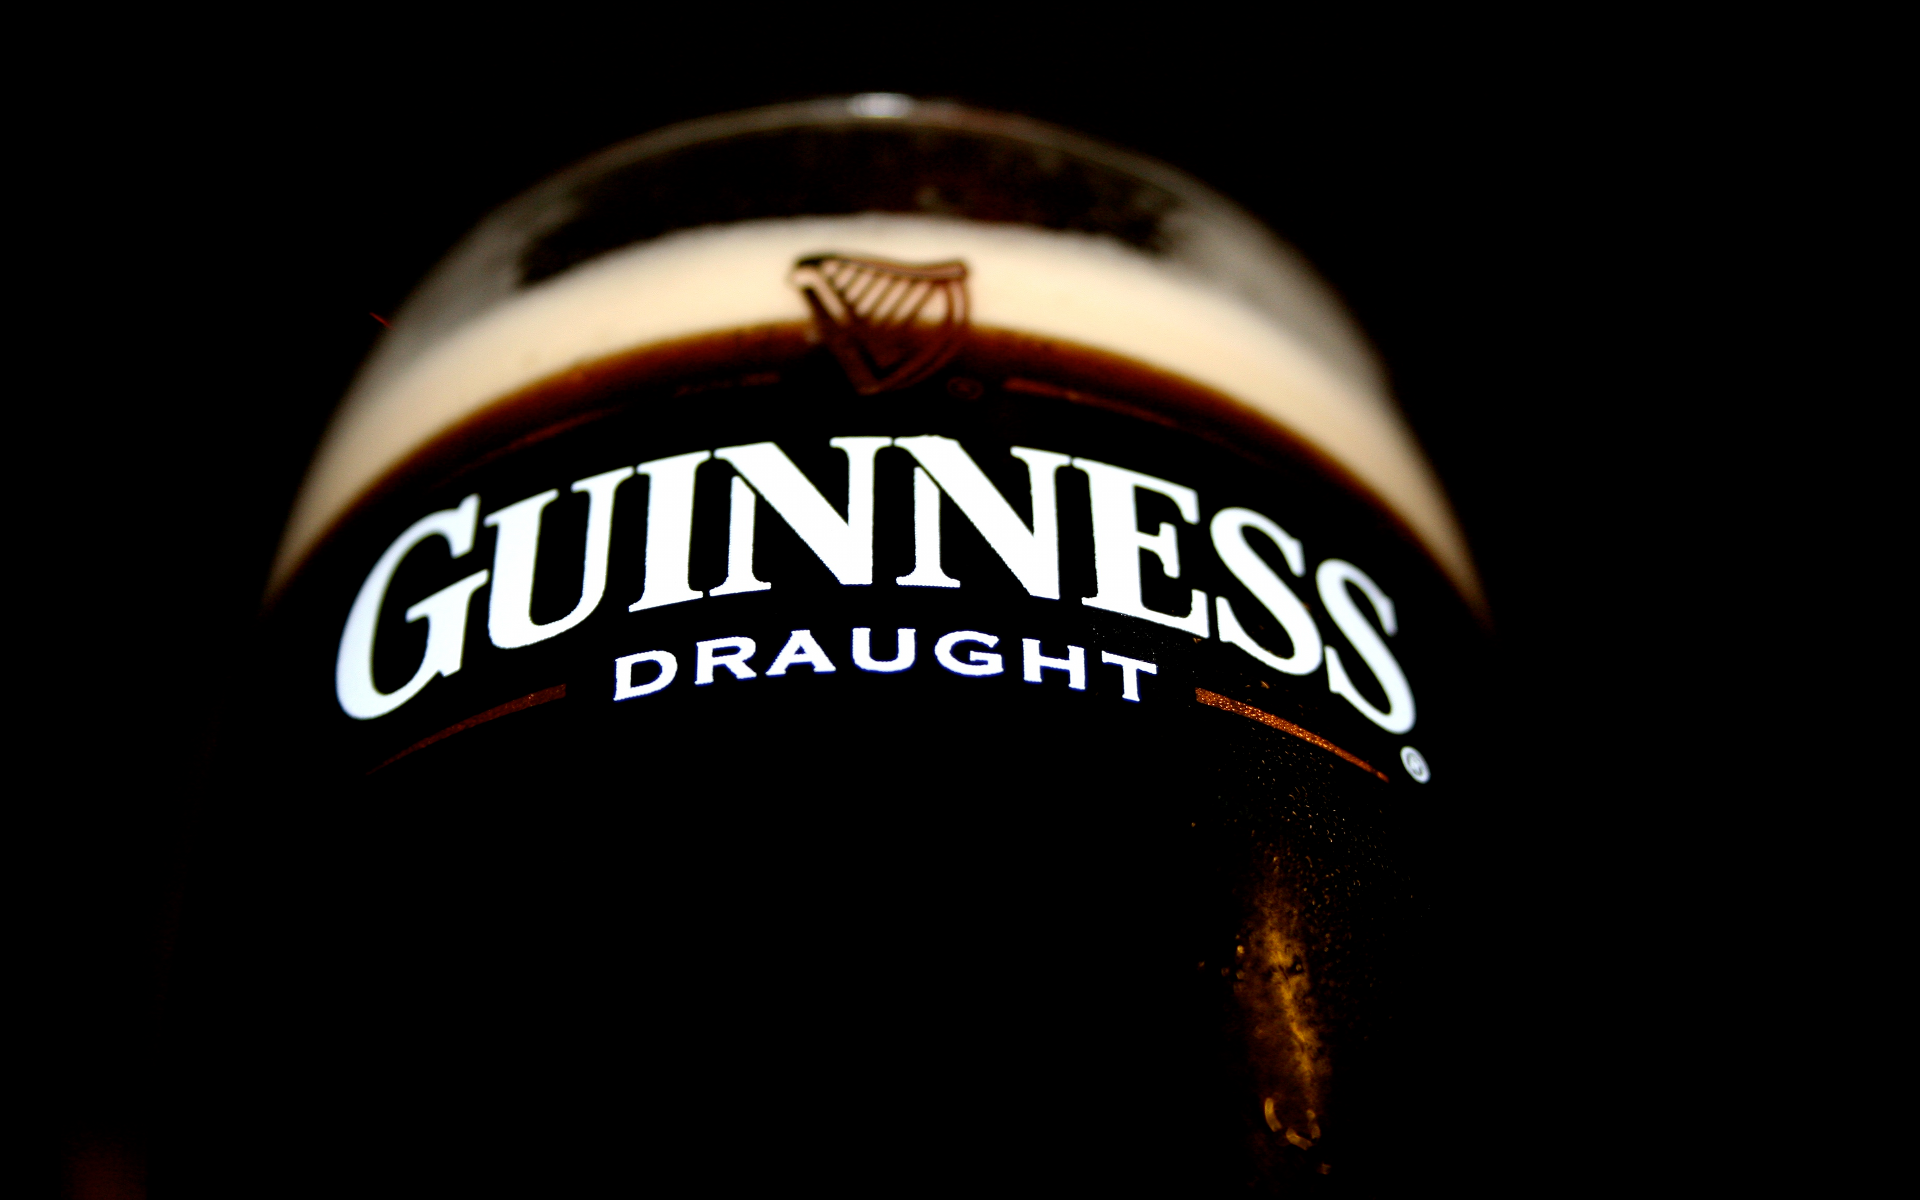 пиво, Guinness - обои на рабочий стол